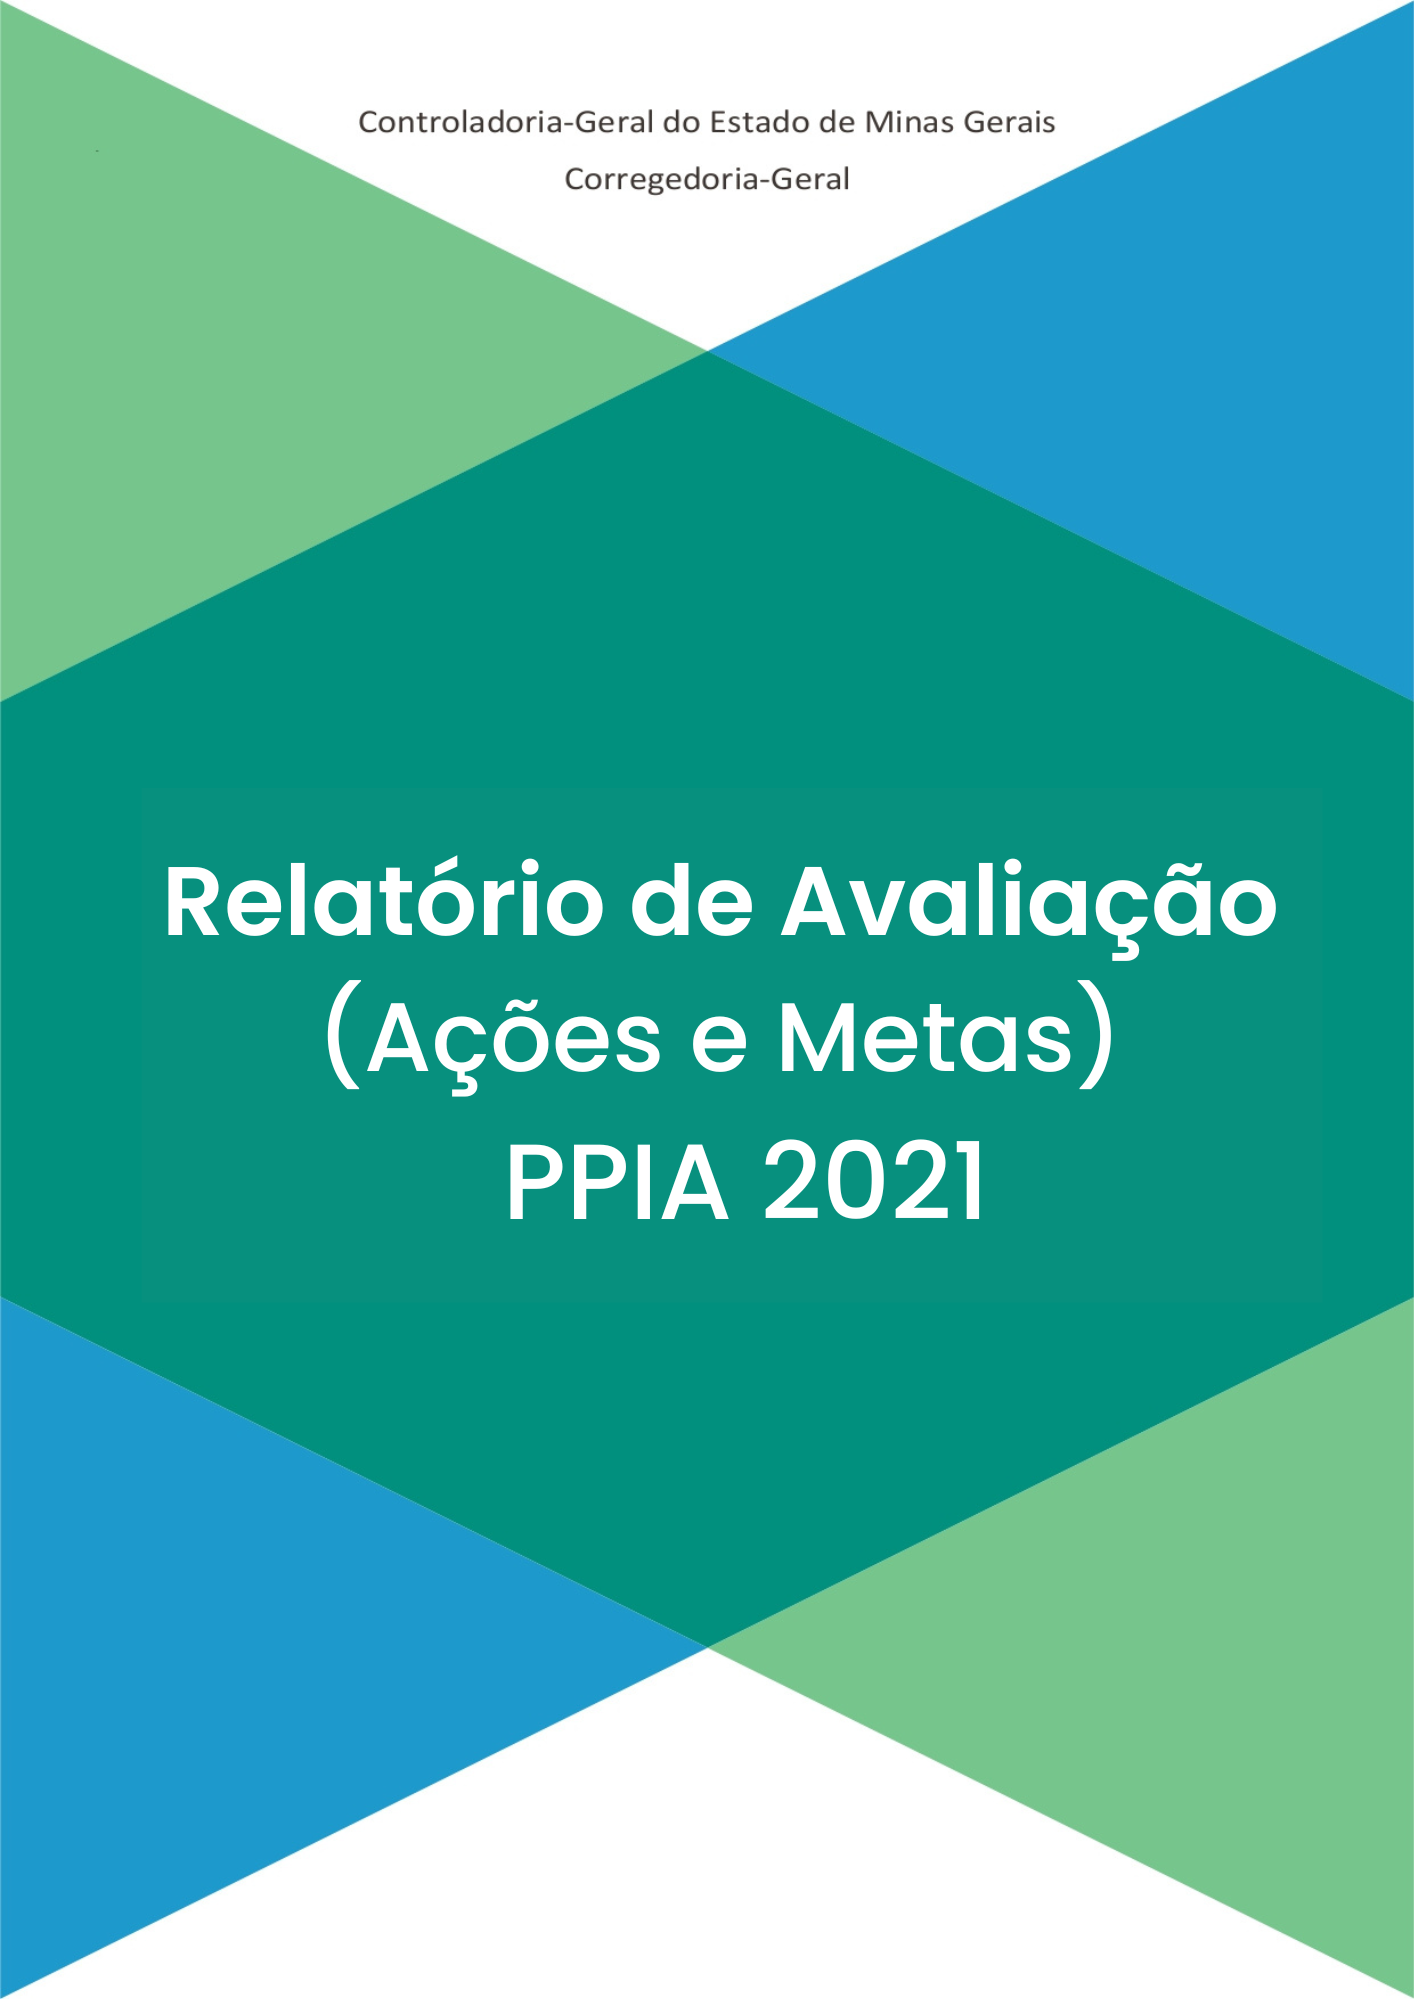 PPIA 2021 Relatorio